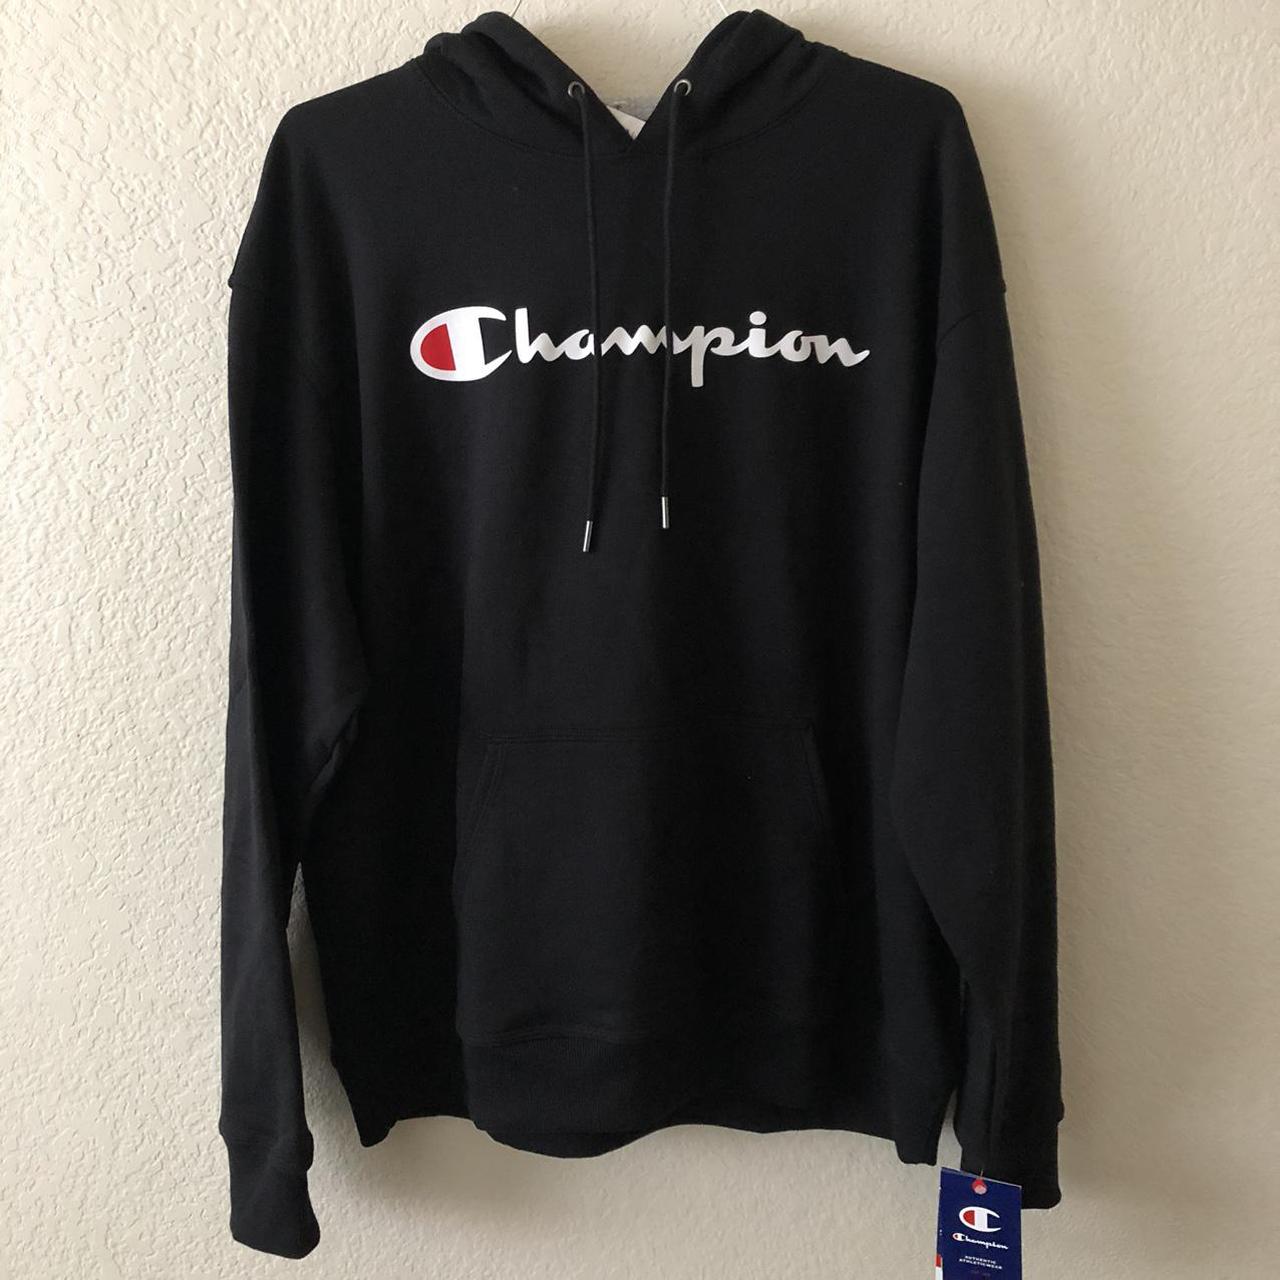 Product Image 1 - Champion black hoodie

Super cozy black